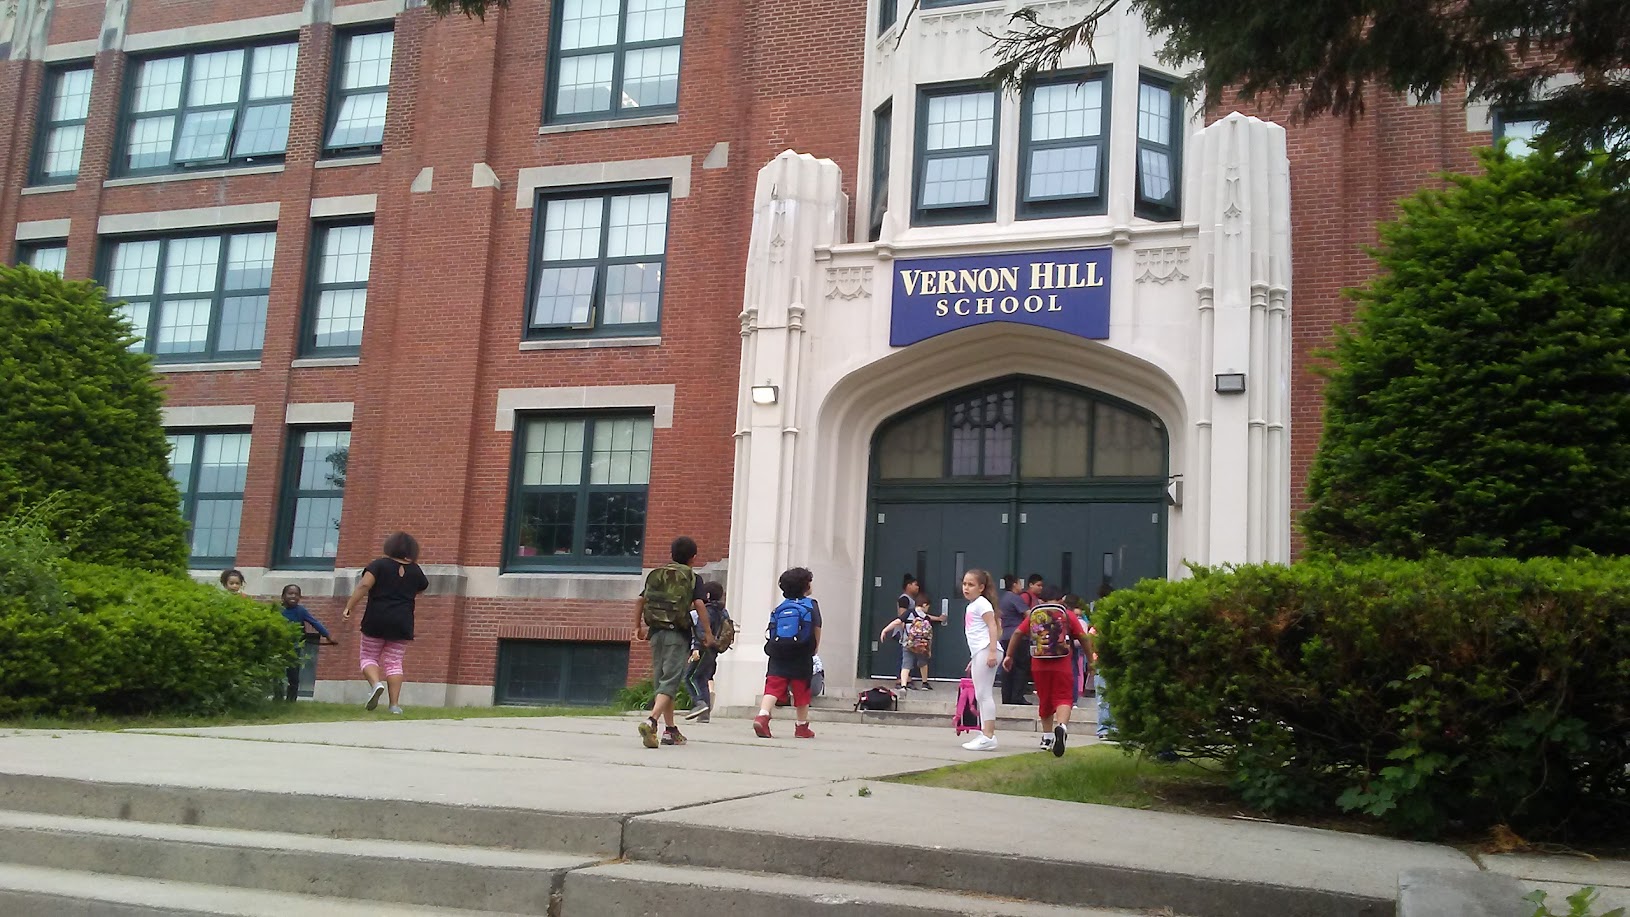 Vernon Hill Elementary School